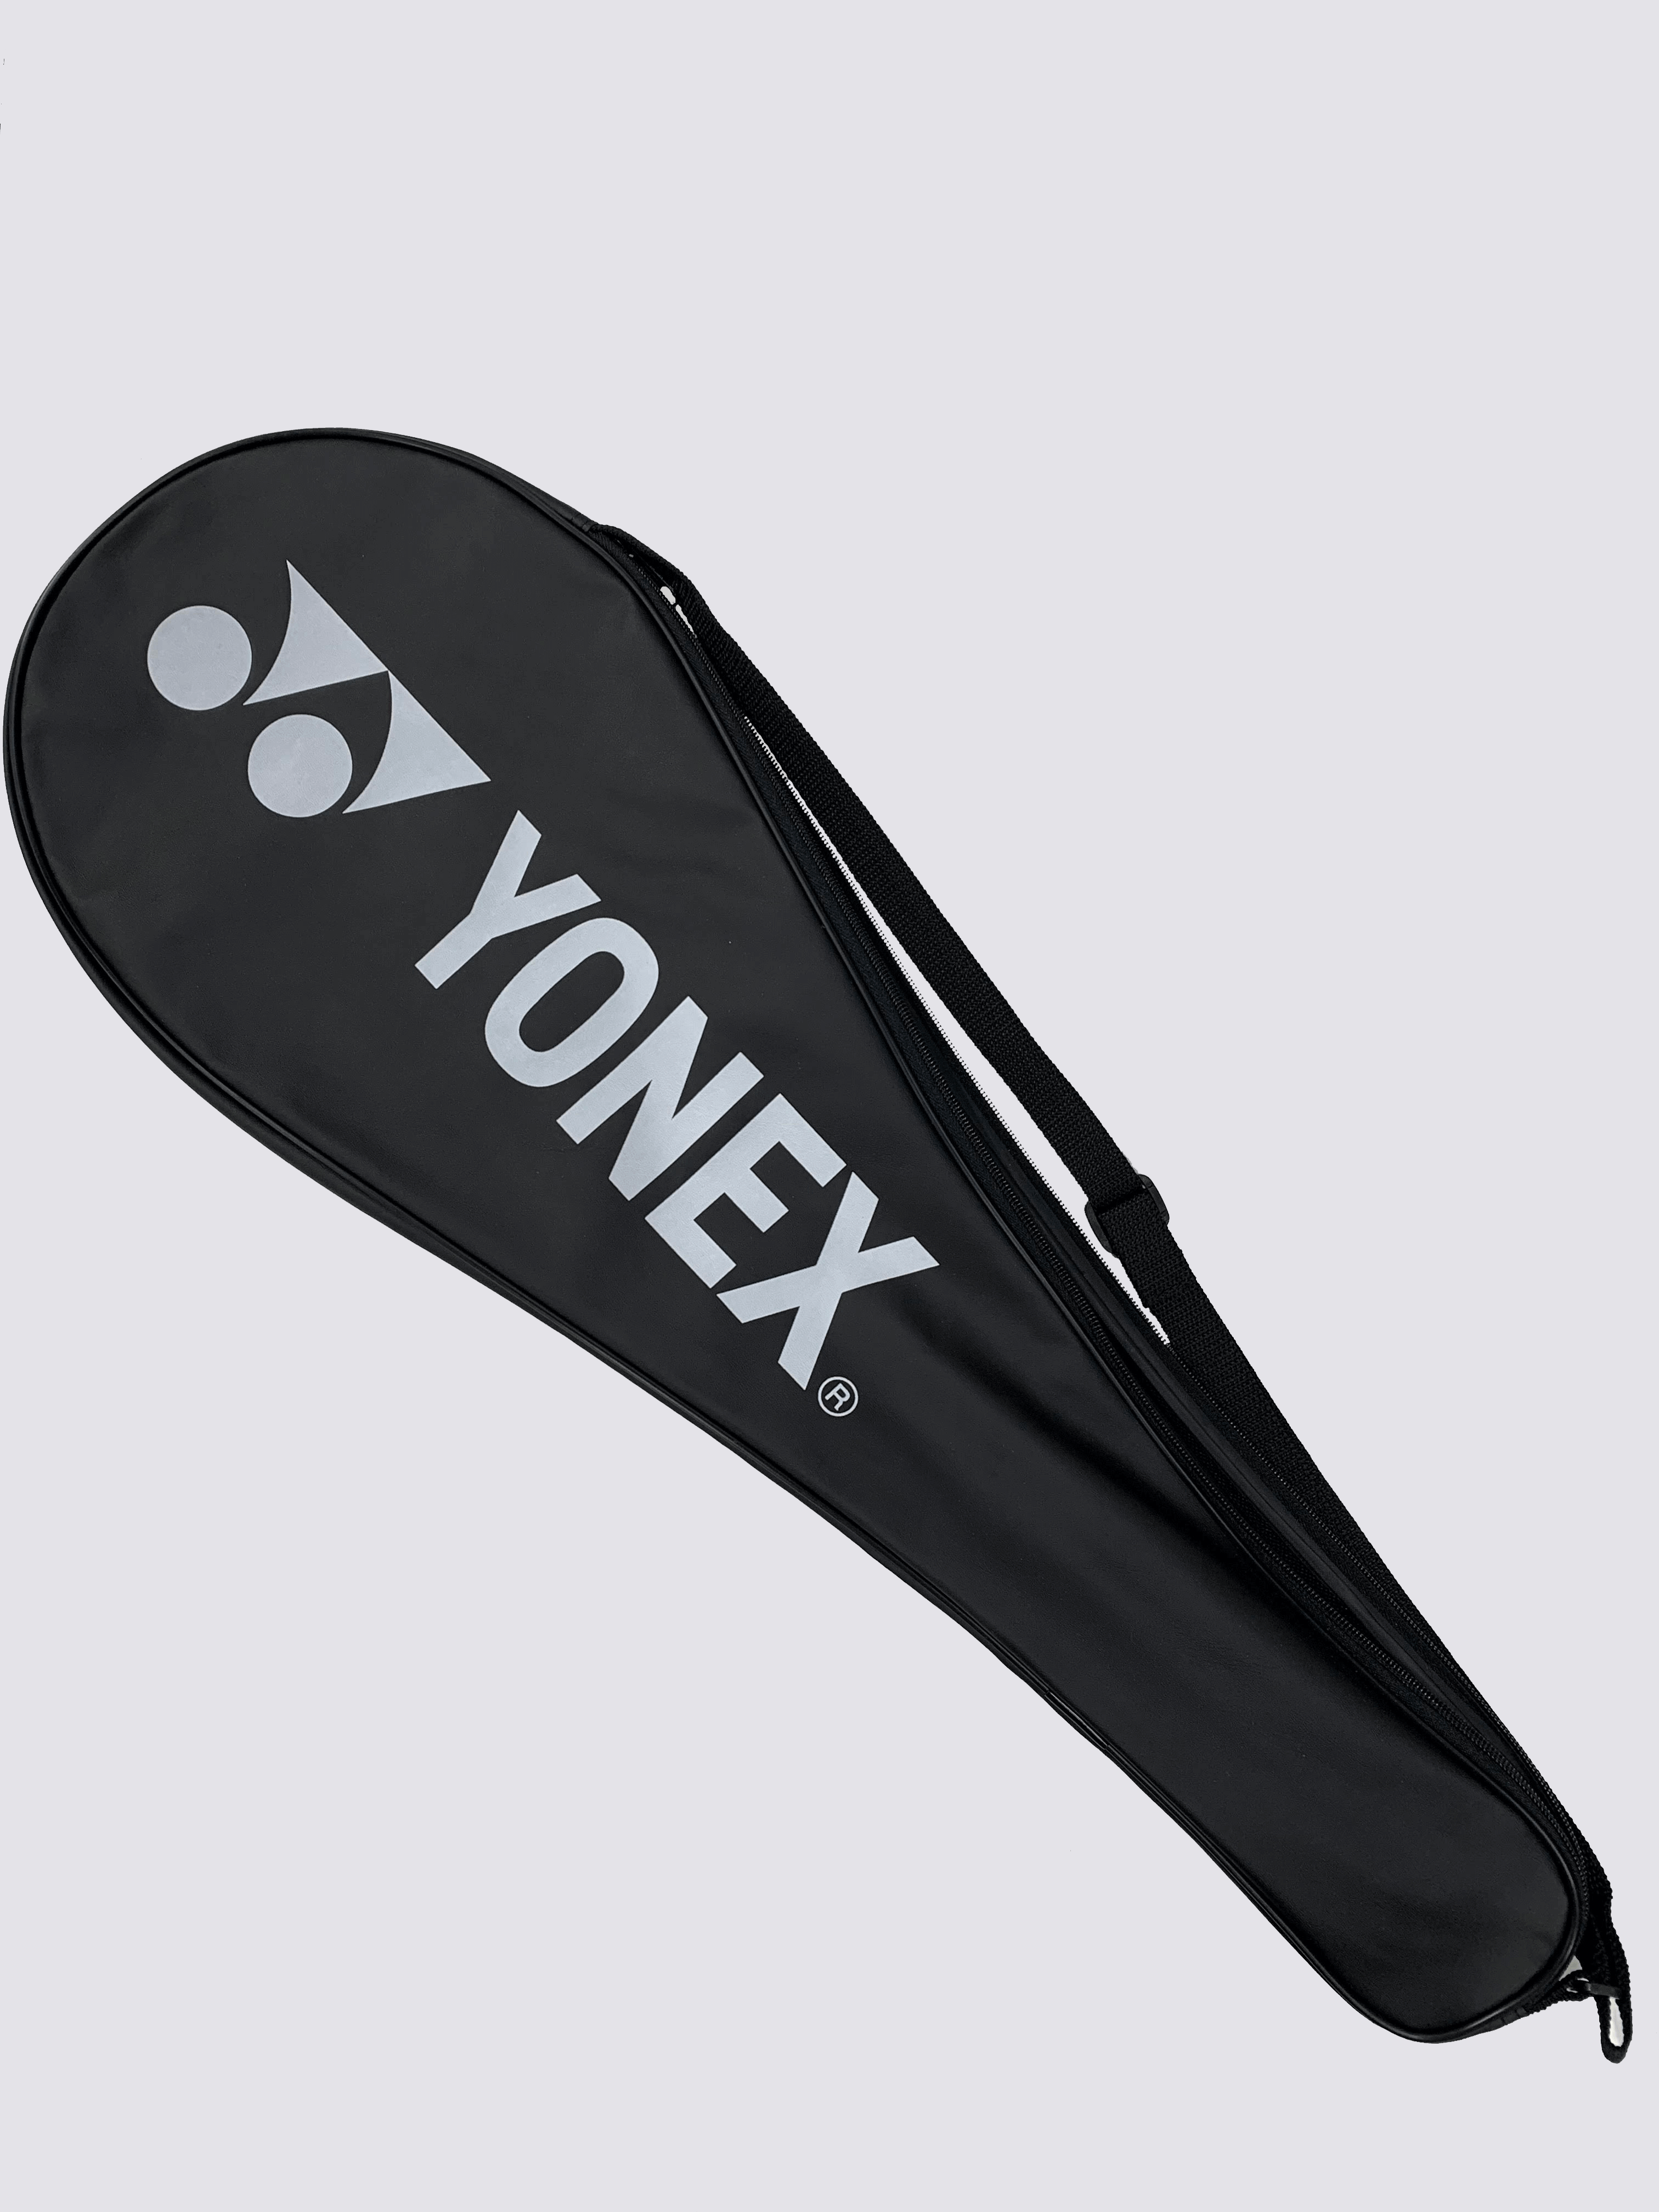 Yonex Astrox 2 - 5UG5 (Black / Yellow) Strung (BG65-24lbs)